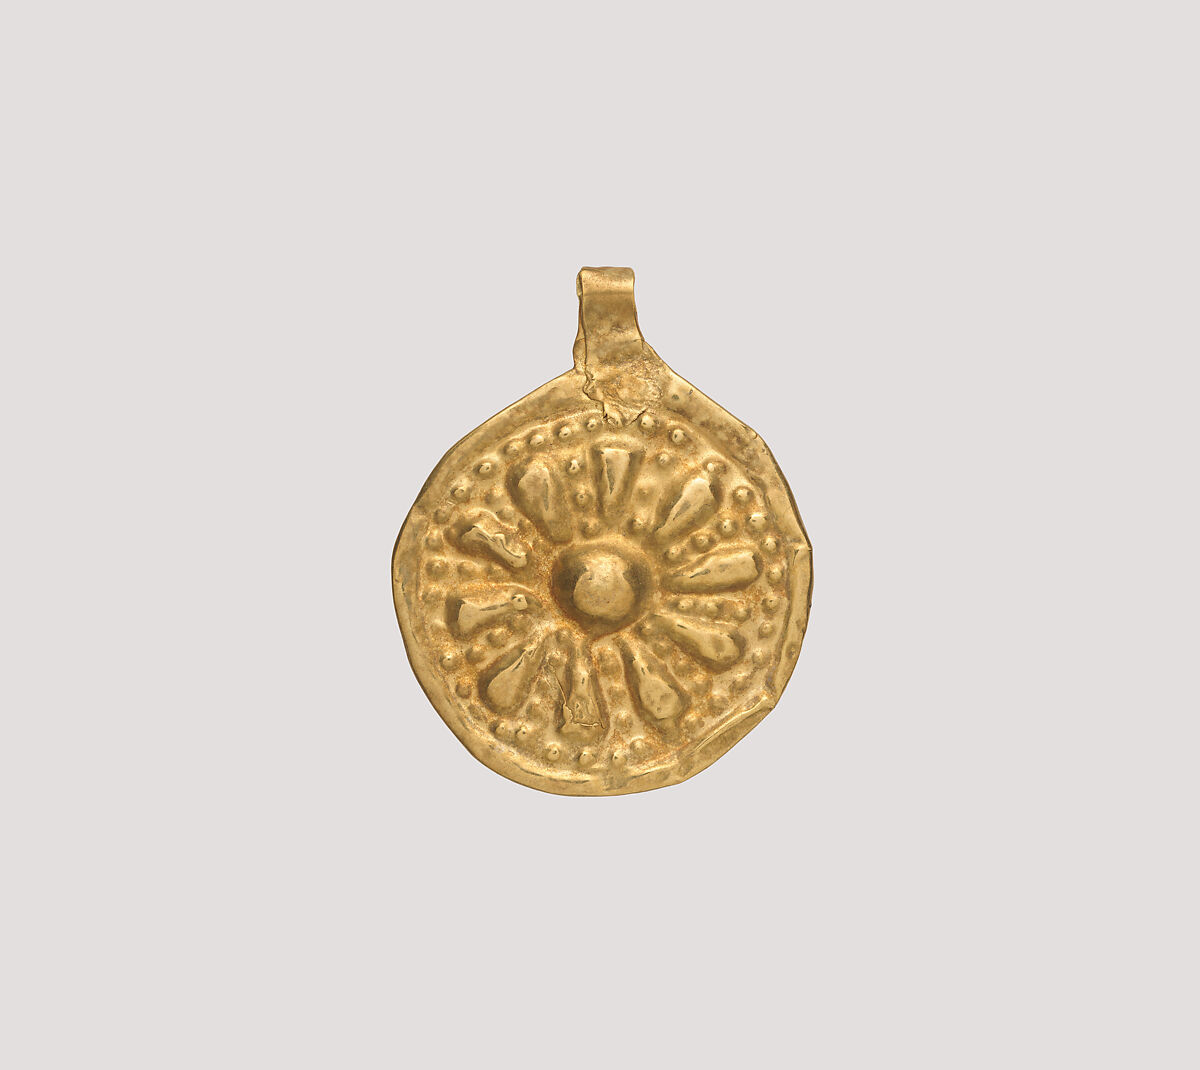 Rosette pendant, Gold, Iran 